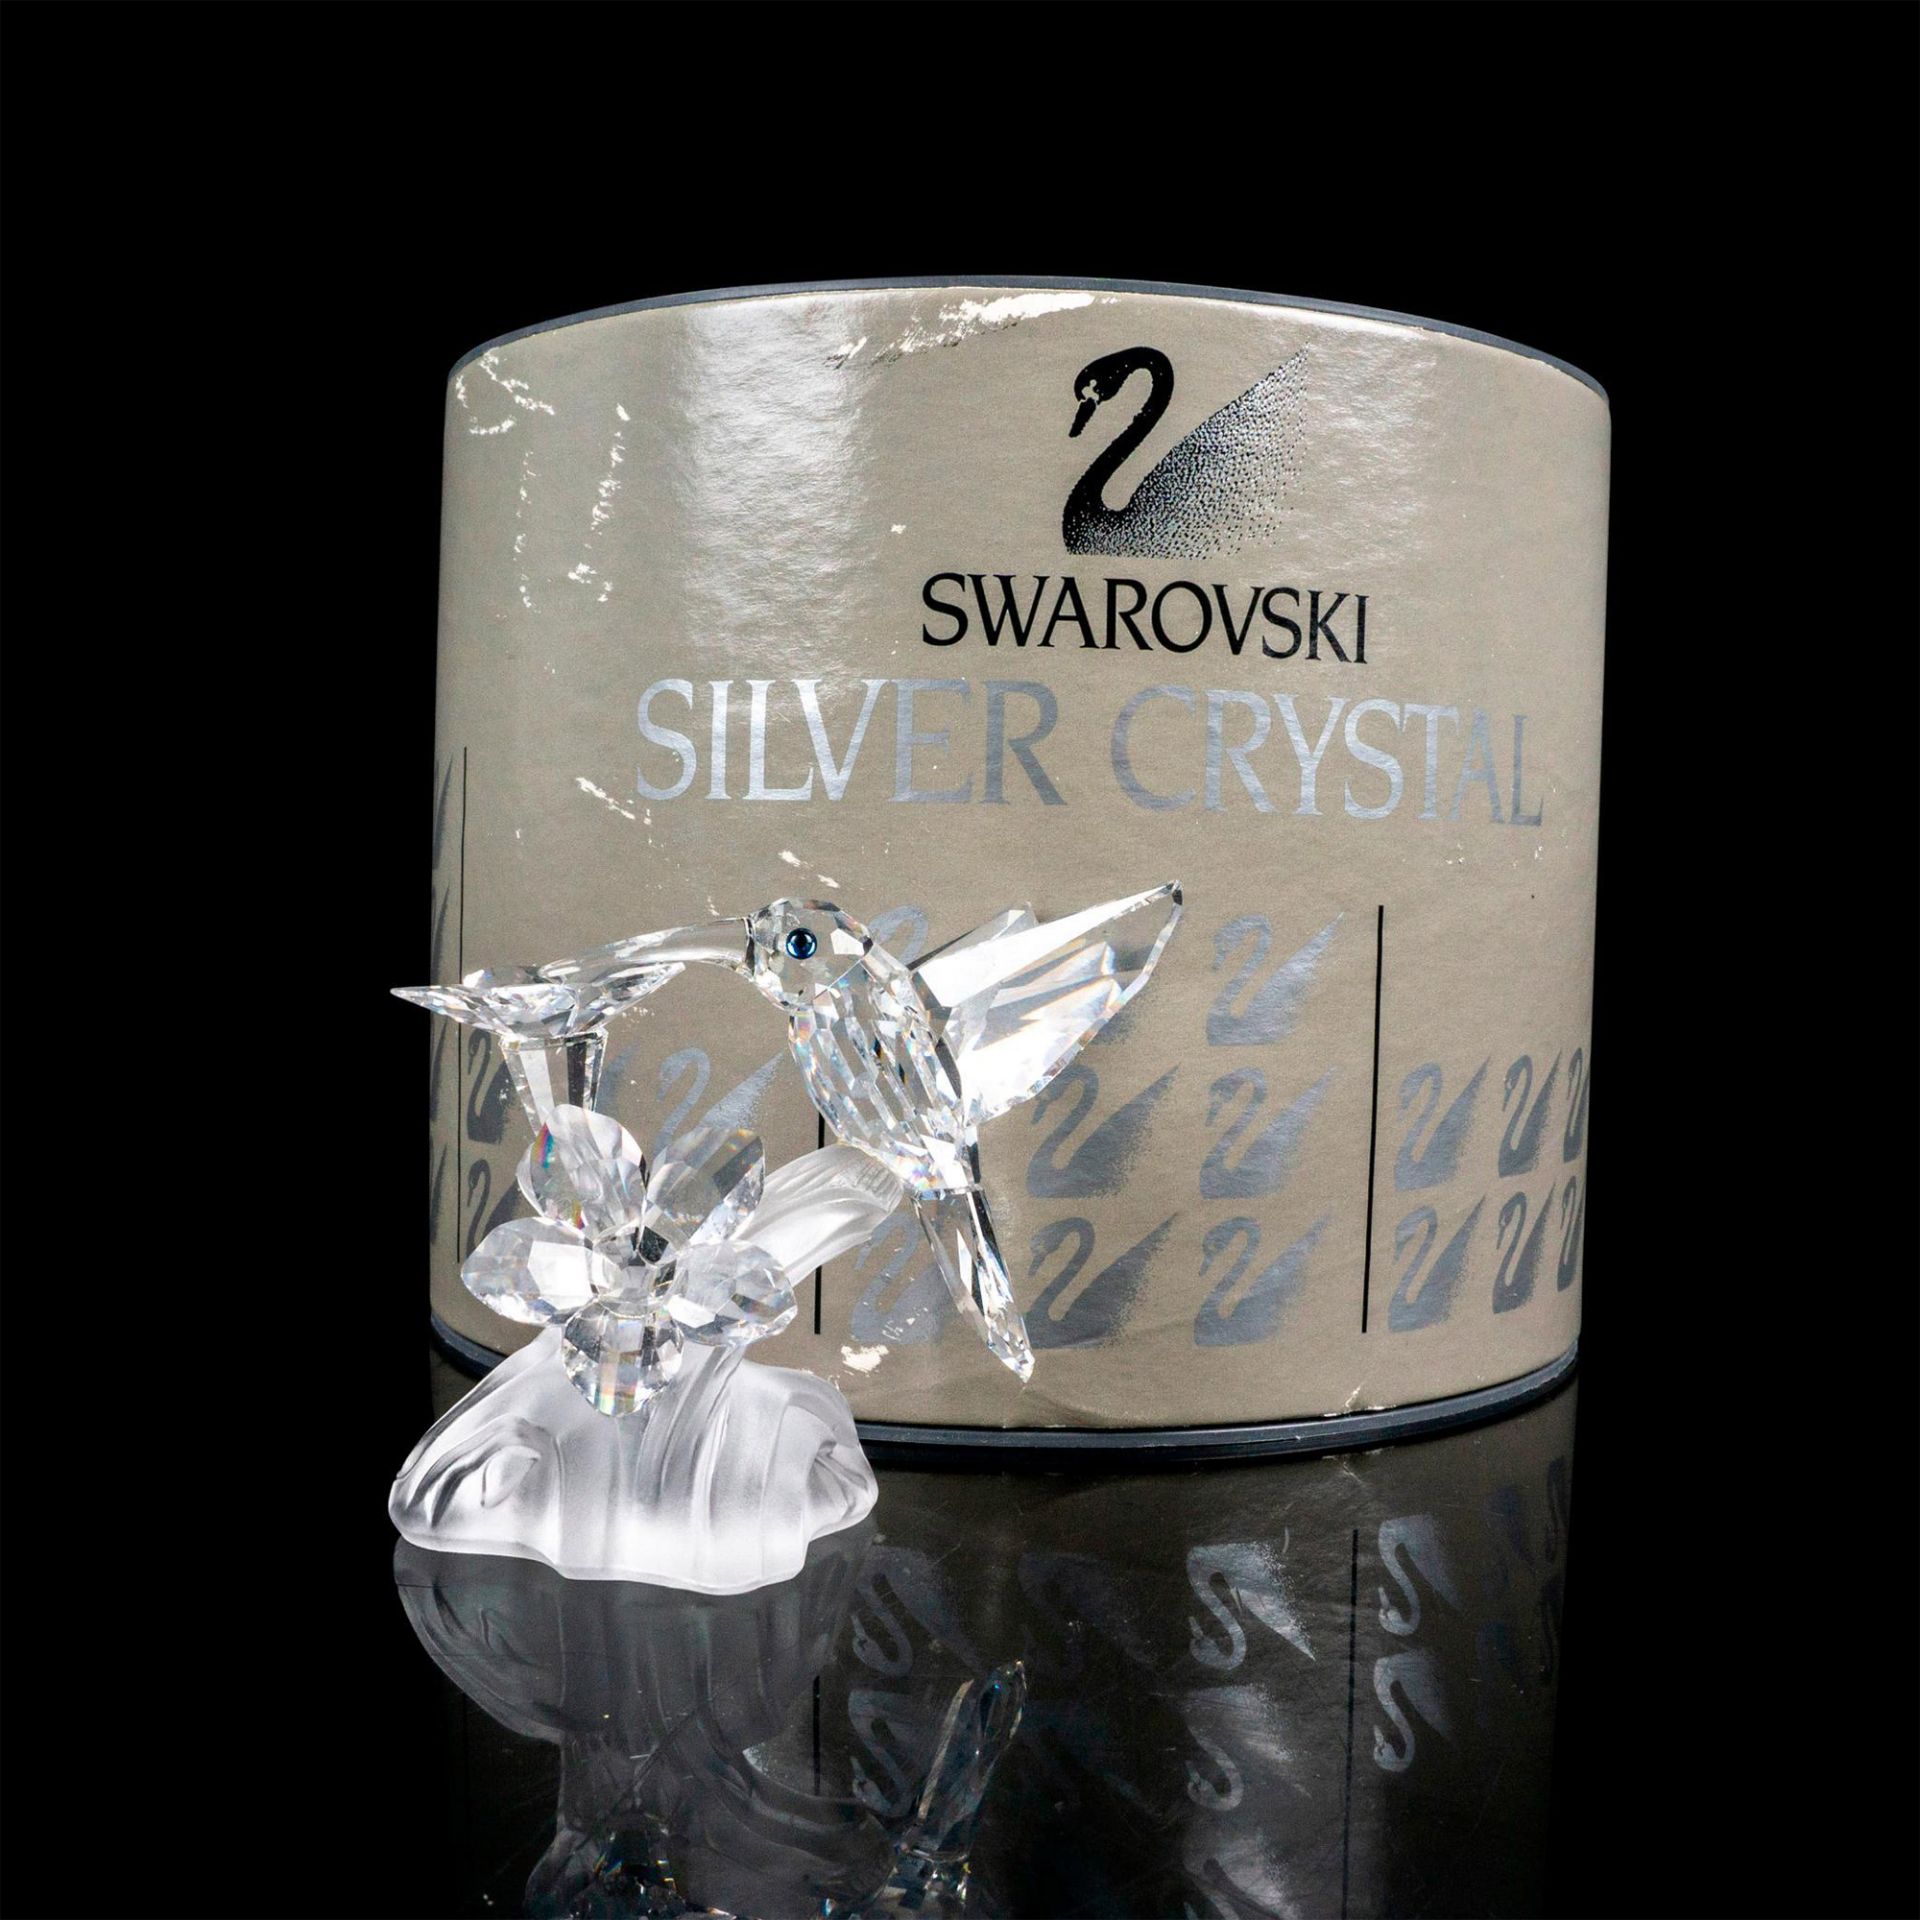 Swarovski Silver Crystal Figurine, Hummingbird - Image 4 of 4